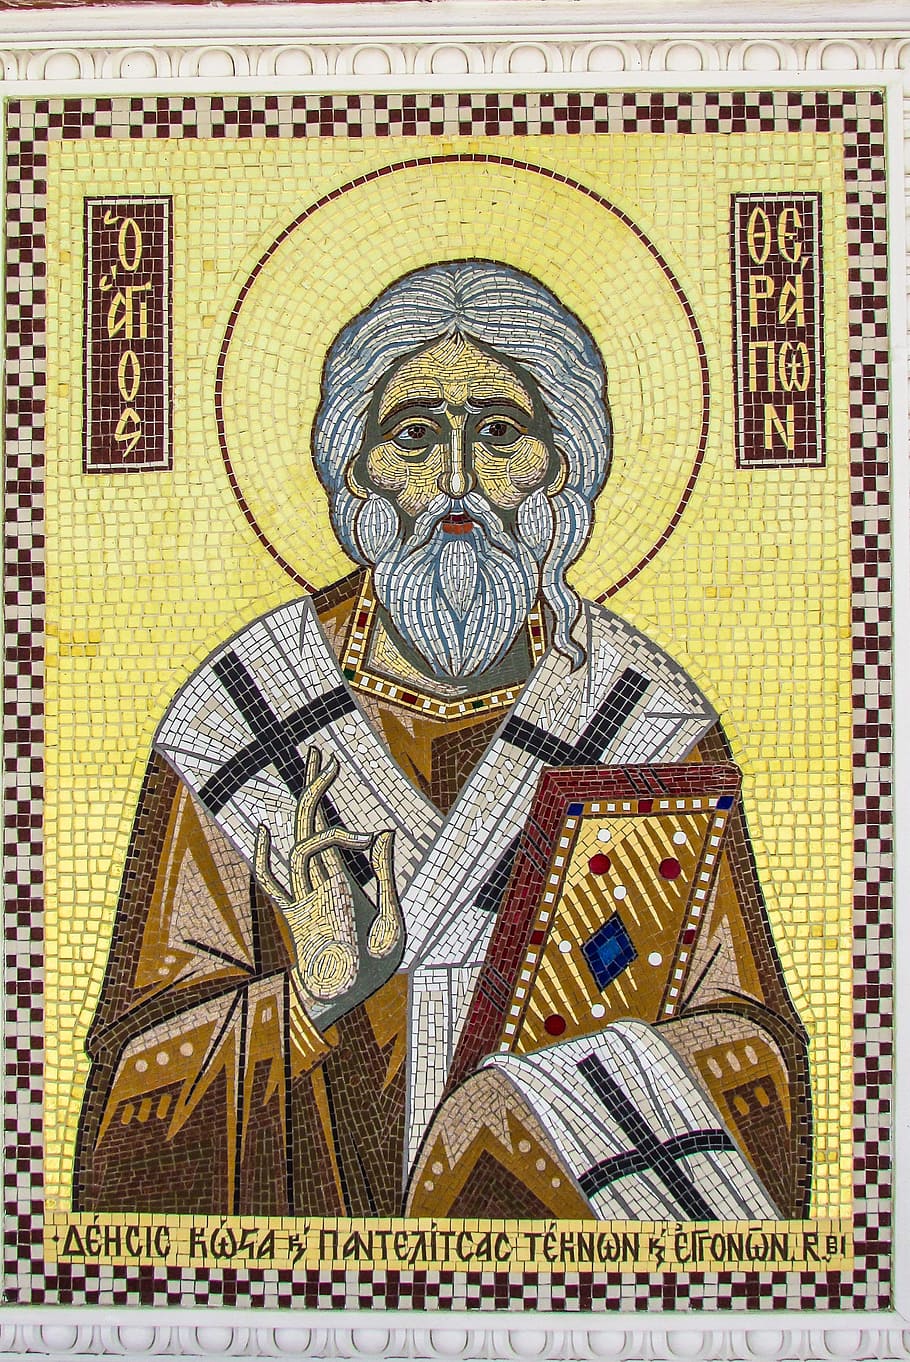 Mosaic, Cyprus, ayios therapon, agklisides, saint, church, orthodox, religion, postage stamp, close-up